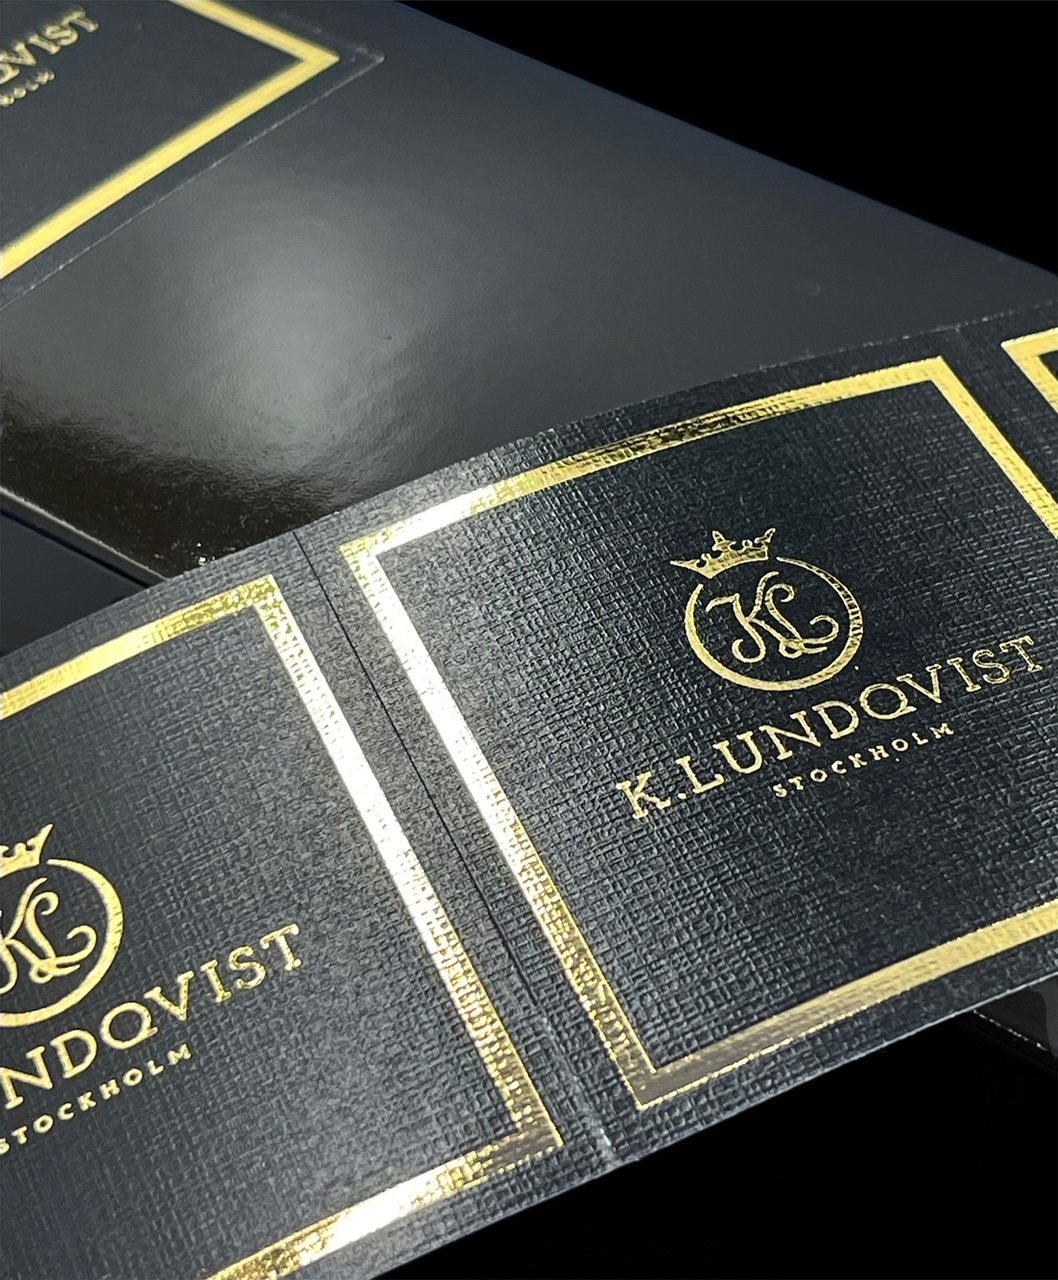 K. Lundqvist Doftpinnar - Almond Blossom - 100 ml